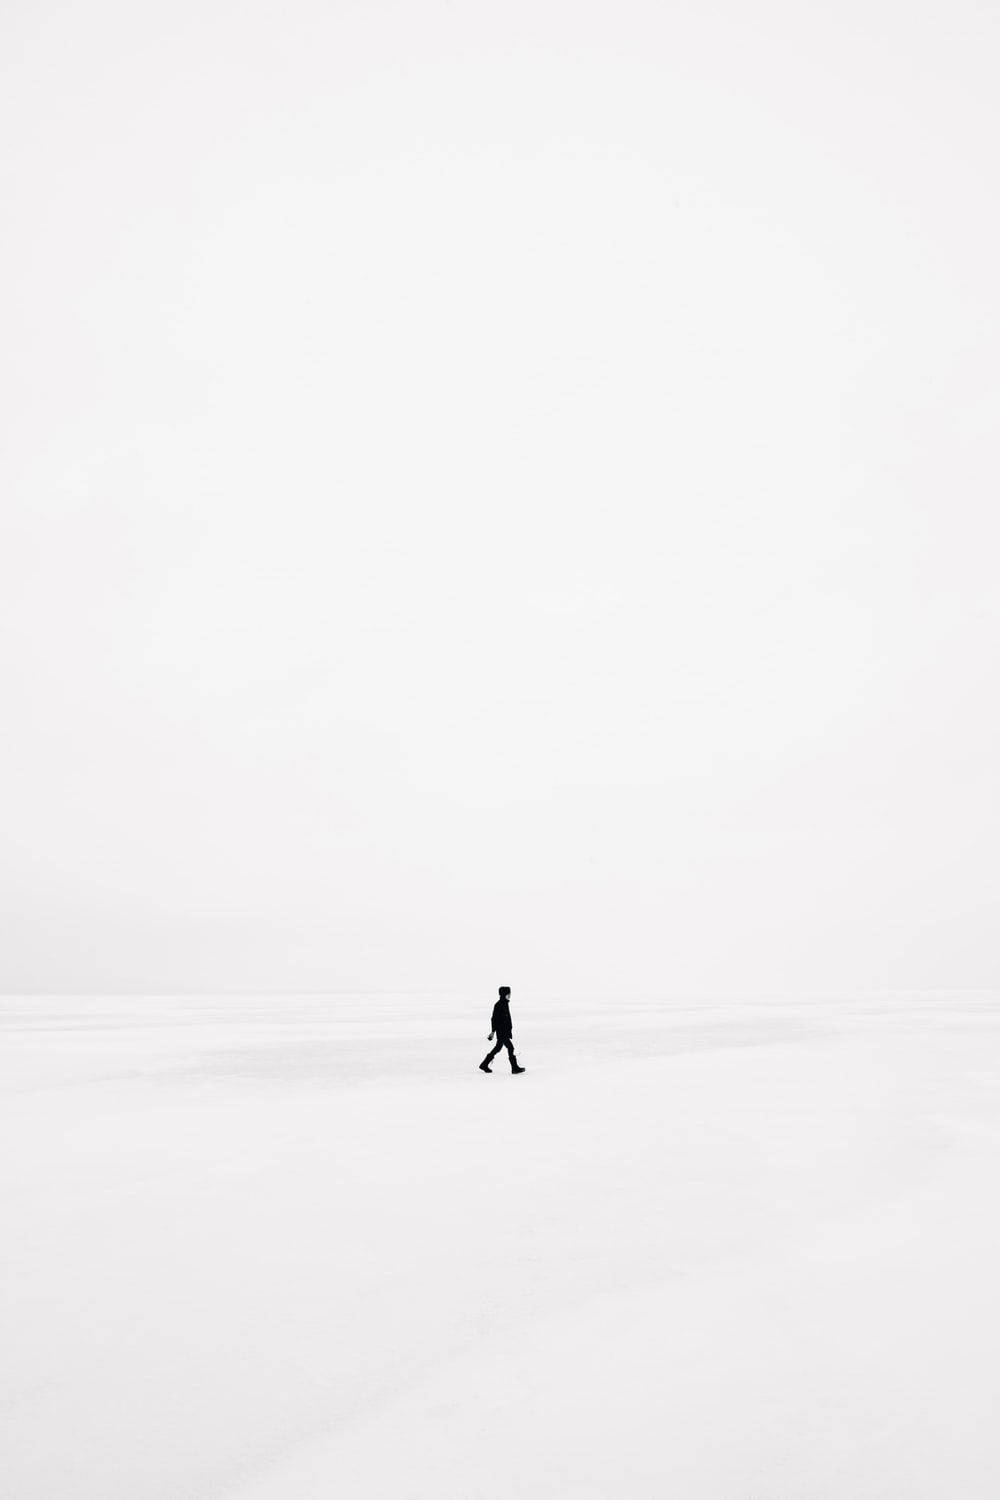 Minimalist Walking Silhouette White Screen Background